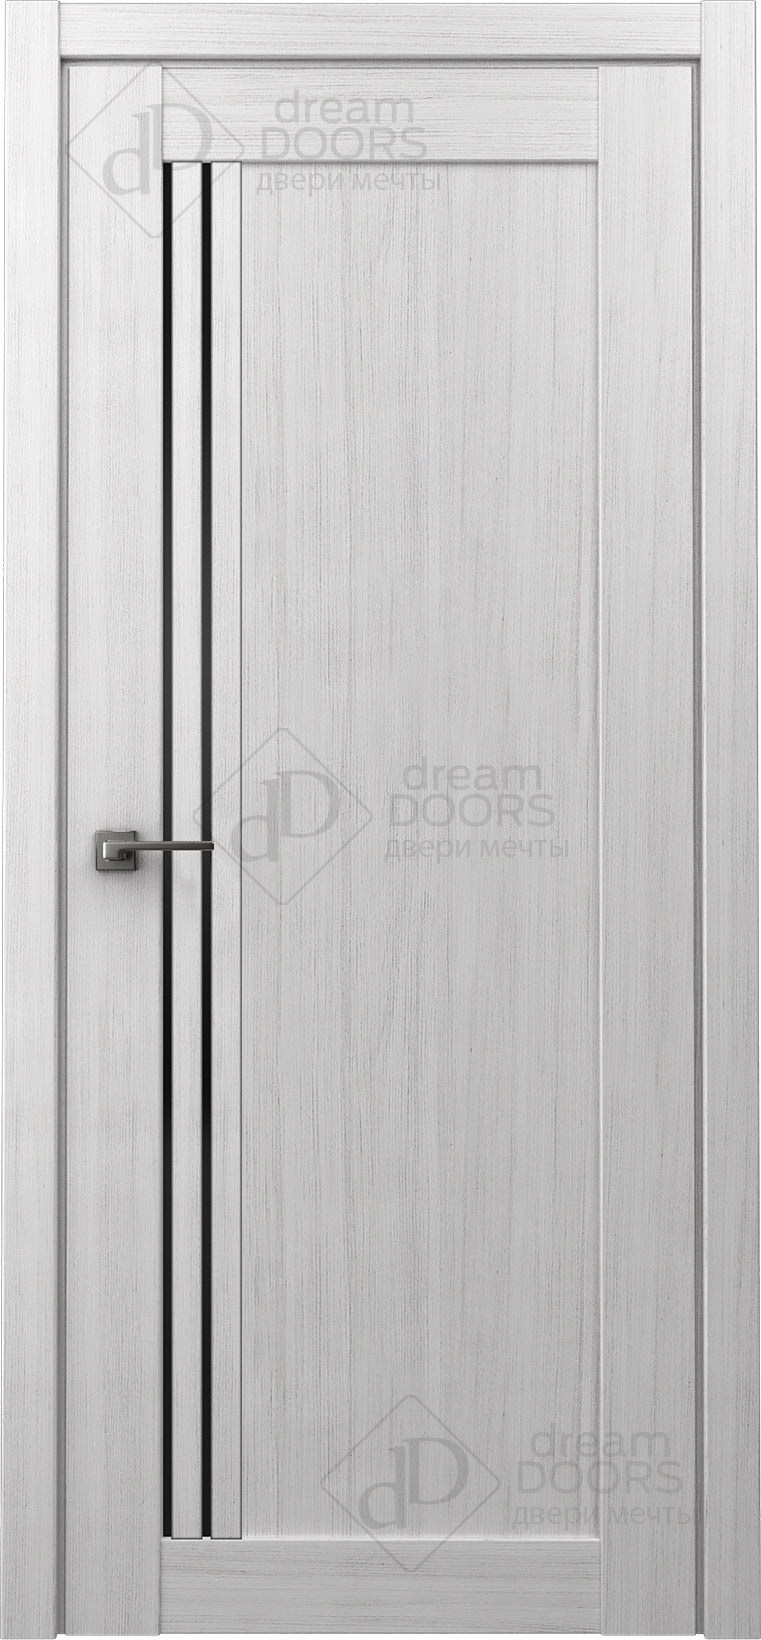 Dream Doors Межкомнатная дверь Престиж 6, арт. 16435 - фото №1